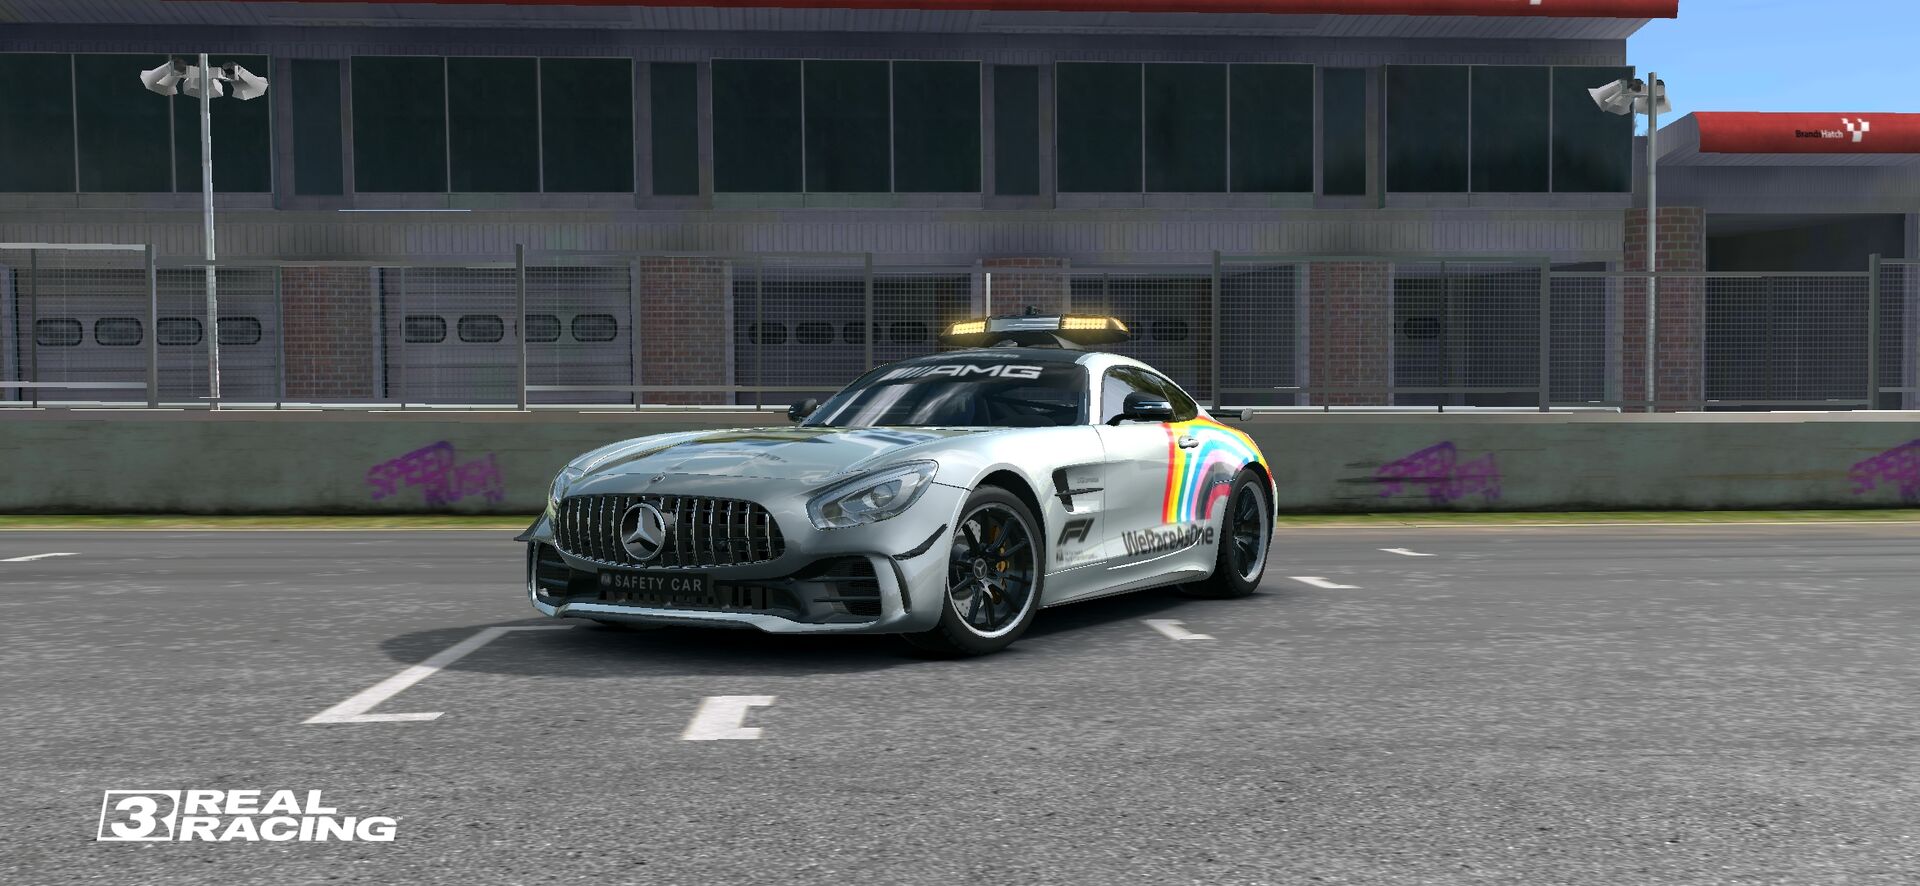 Mercedes-AMG GT - Wikipedia